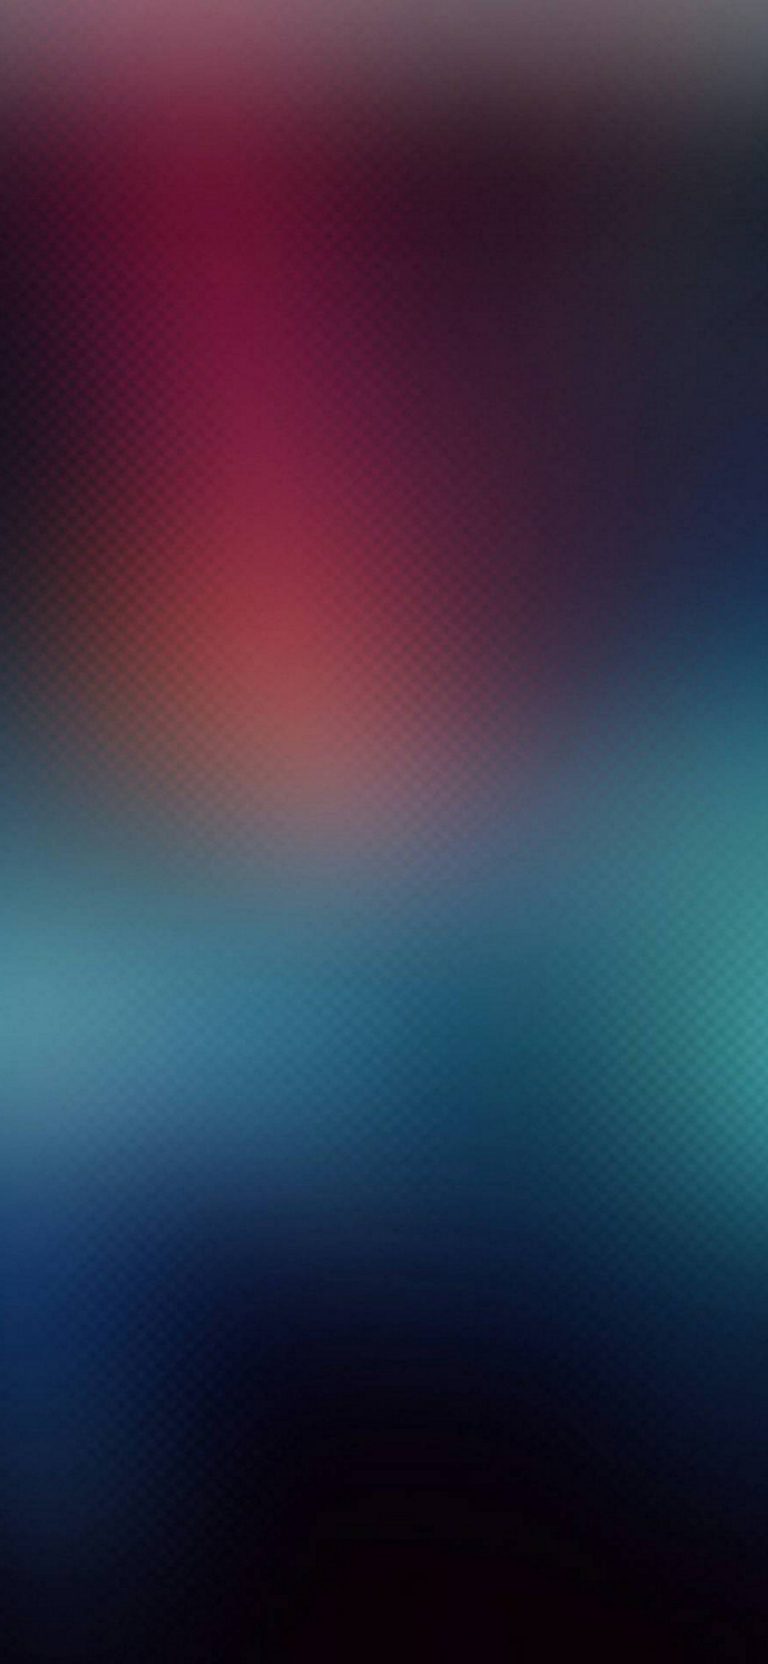  Blur  Phone Wallpaper  1080x2340 020